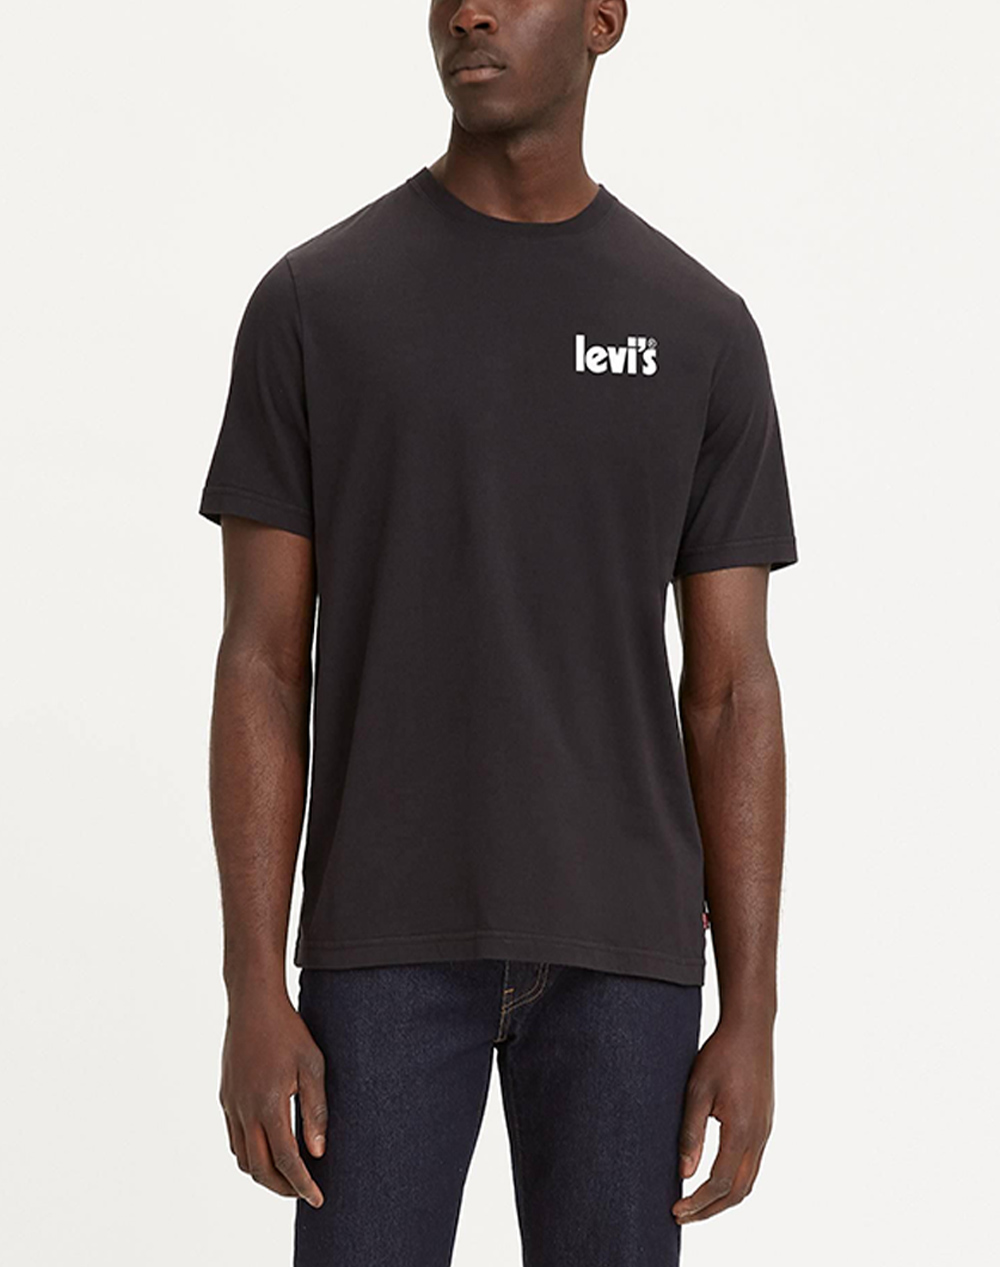 LEVIS Levis Streetwear shirts 16143-0837-0837 Black